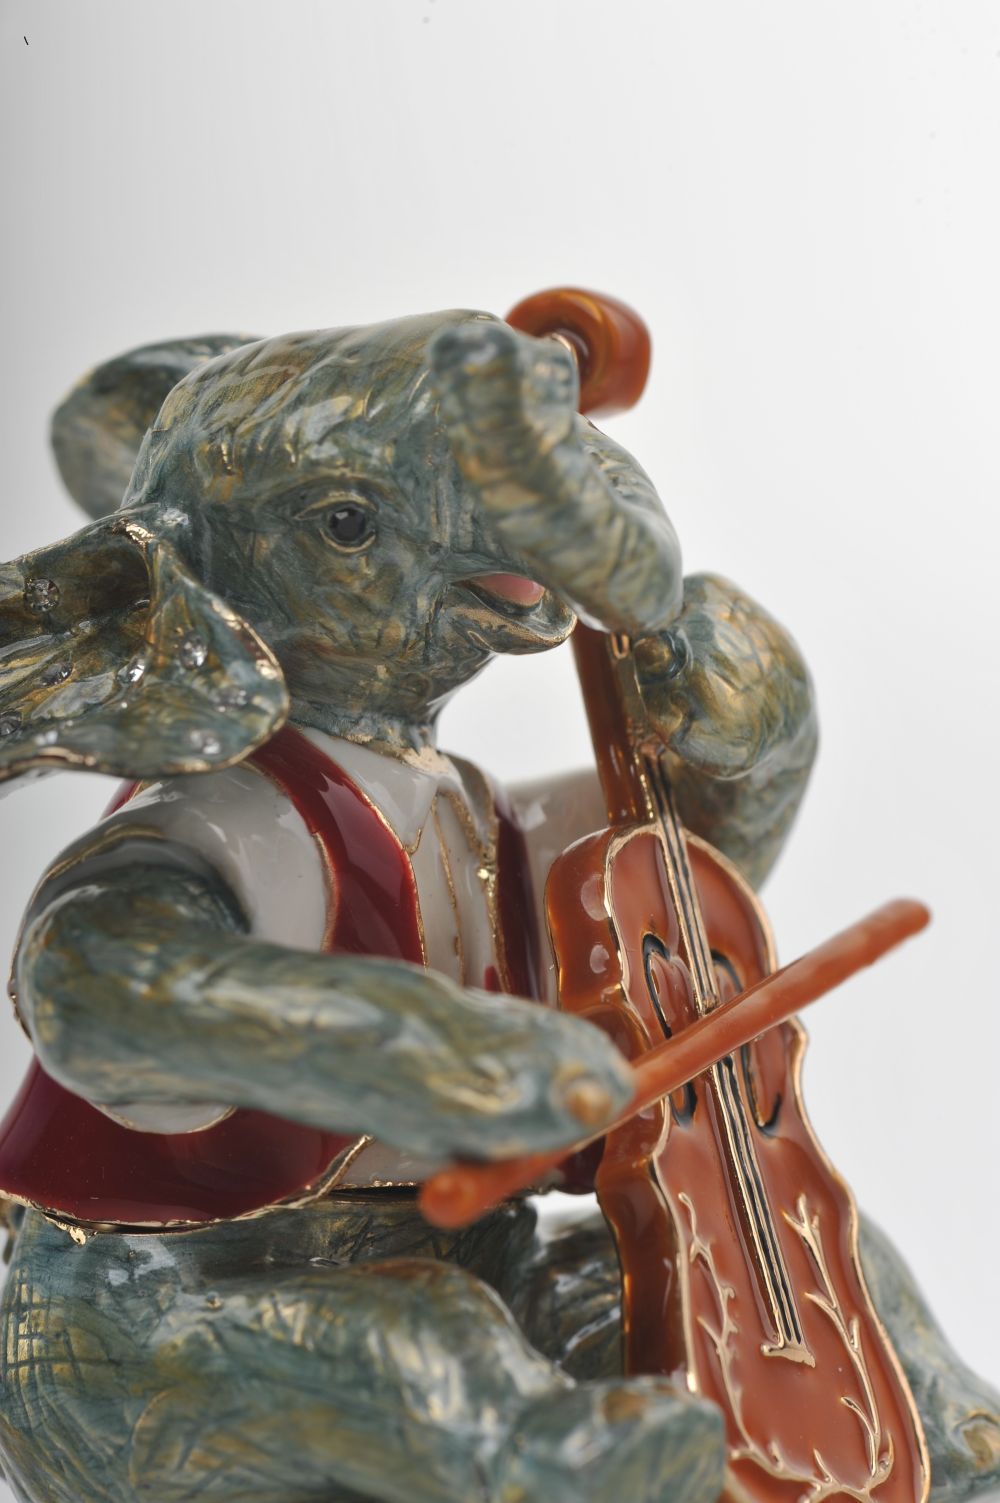 Keren Kopal Elephant Playing the Cello  83.50